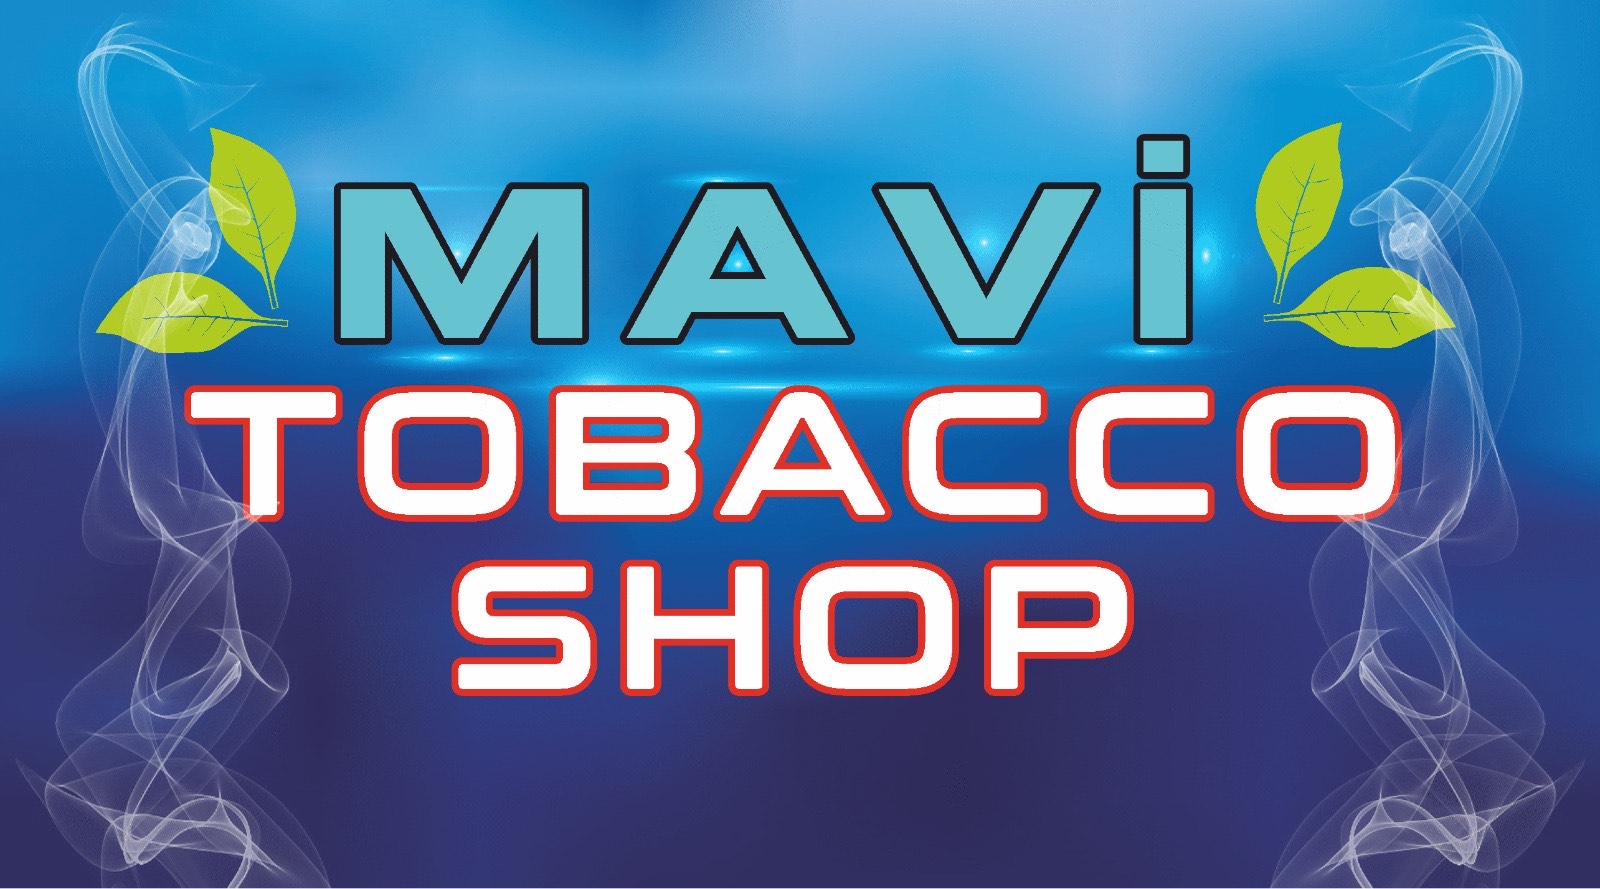 Mavi Tobacco Shop